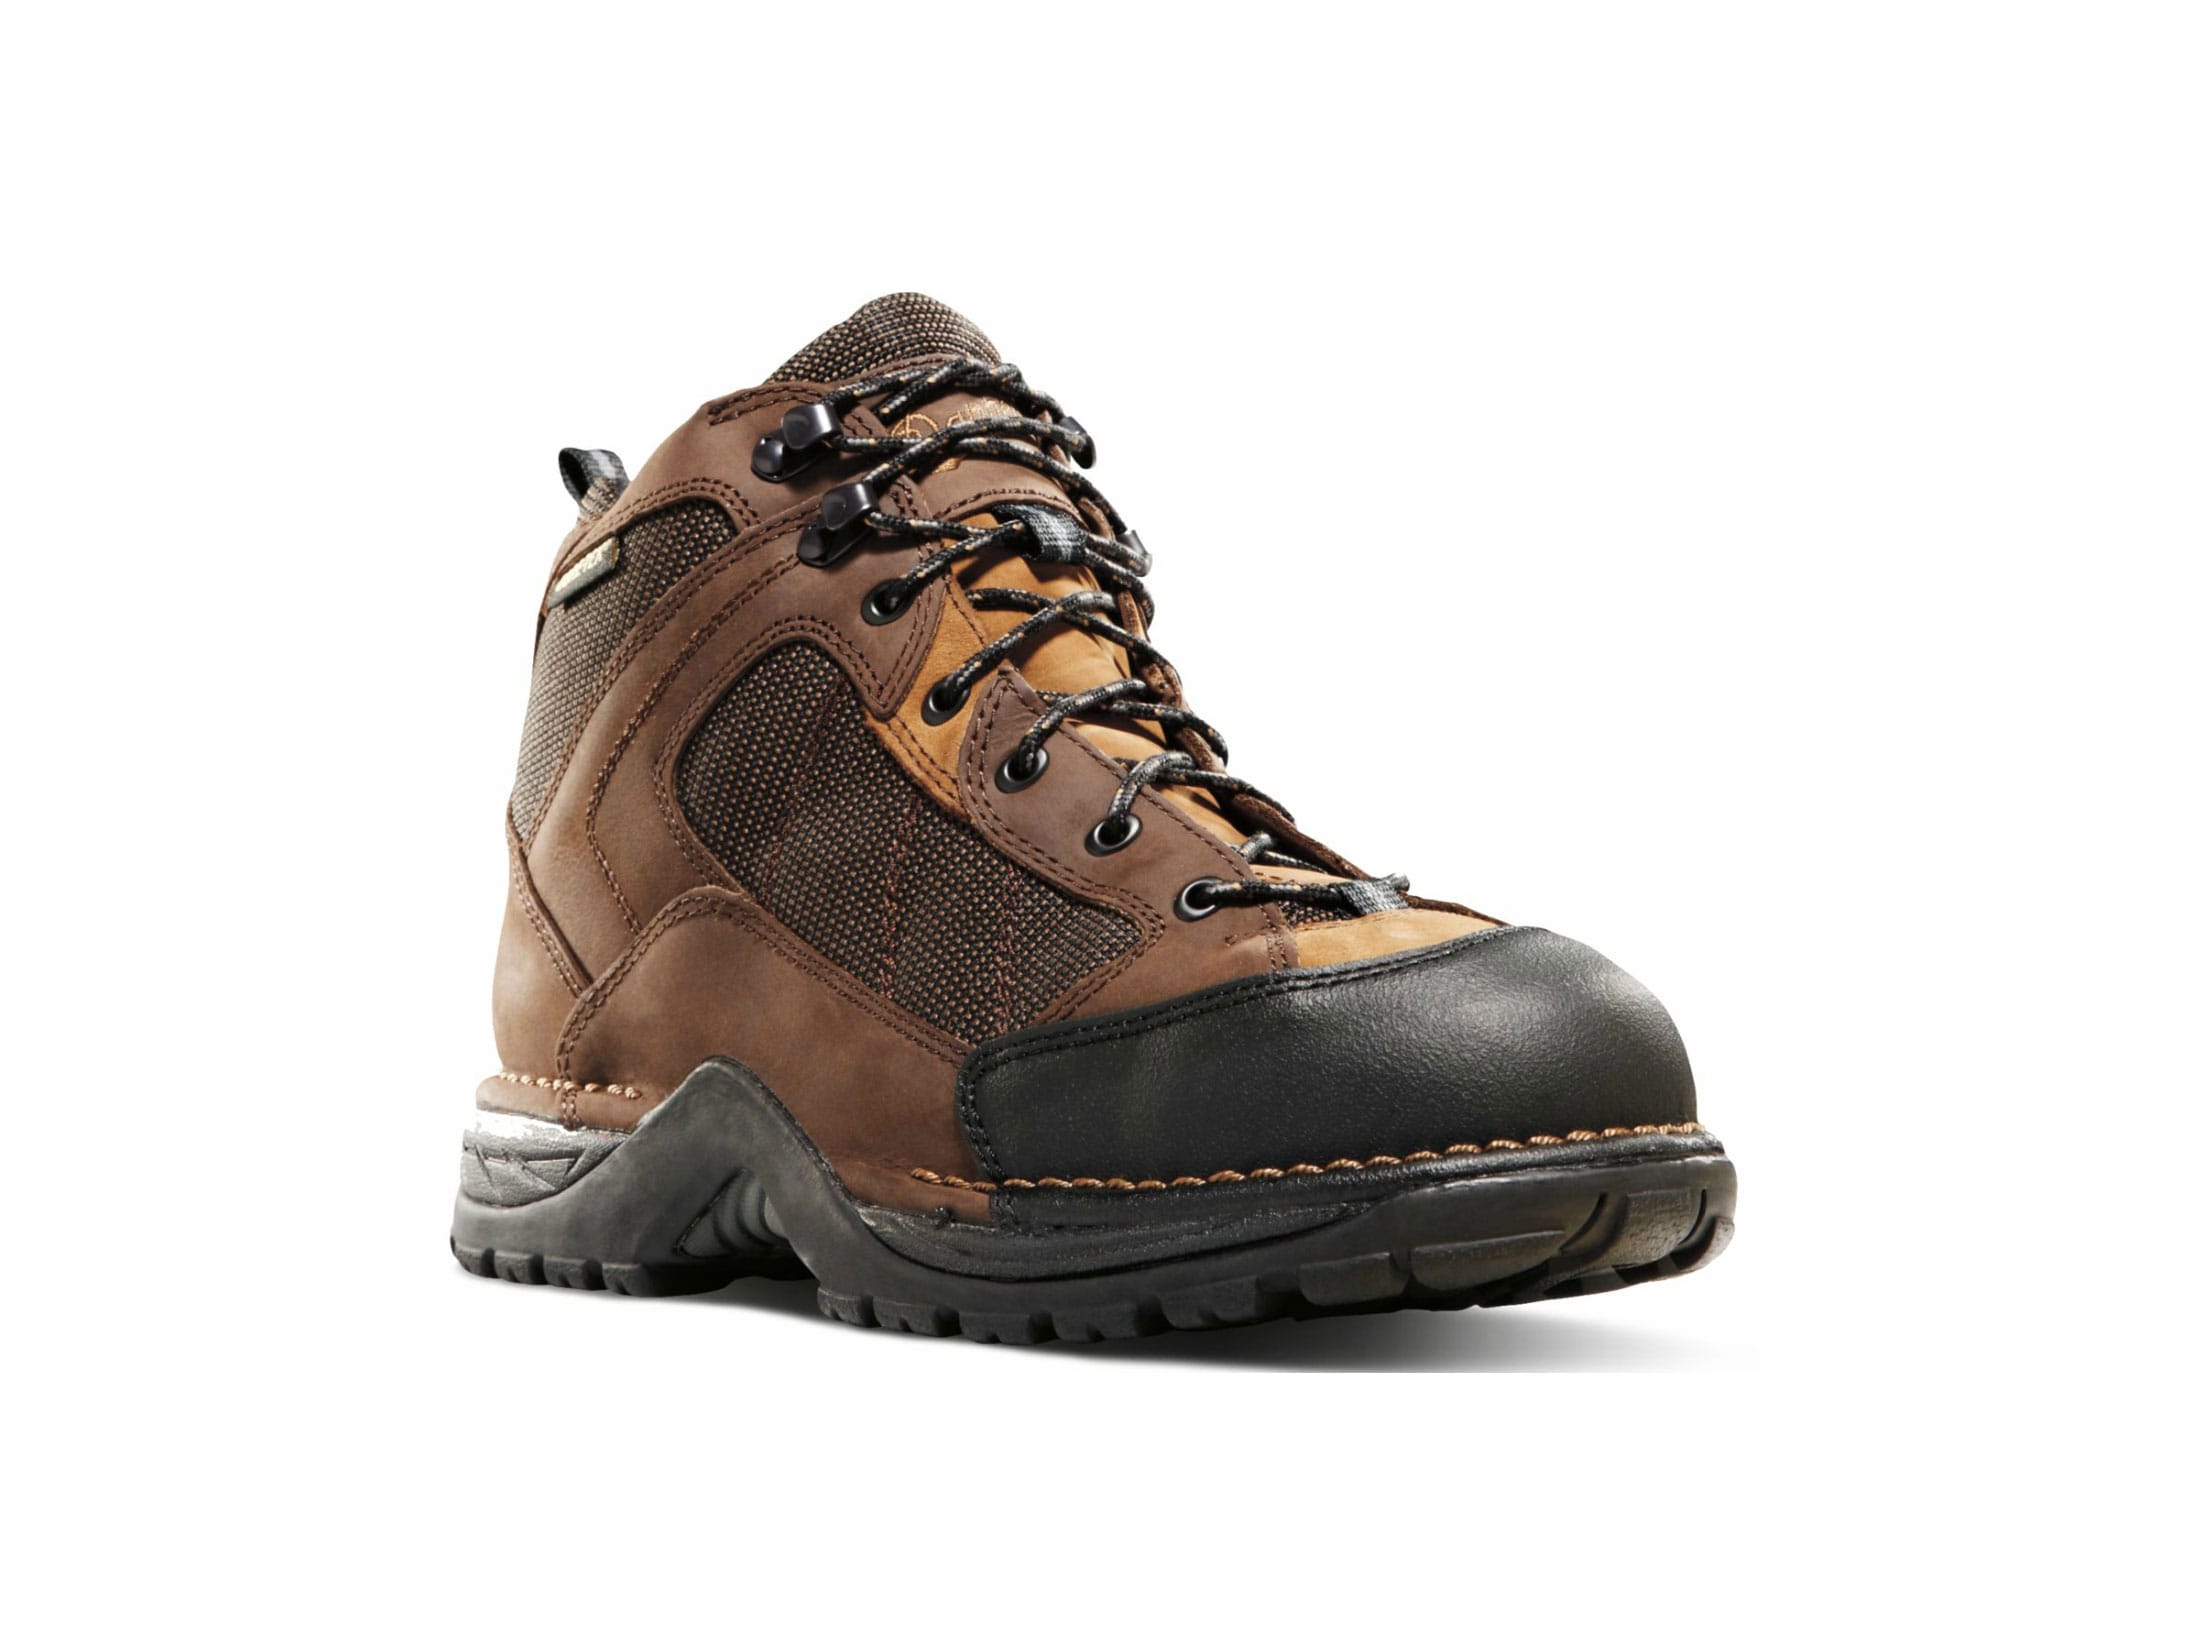 Danner Radical 452 5.5 GORE-TEX Hiking Boots Leather Nylon Dark Brown